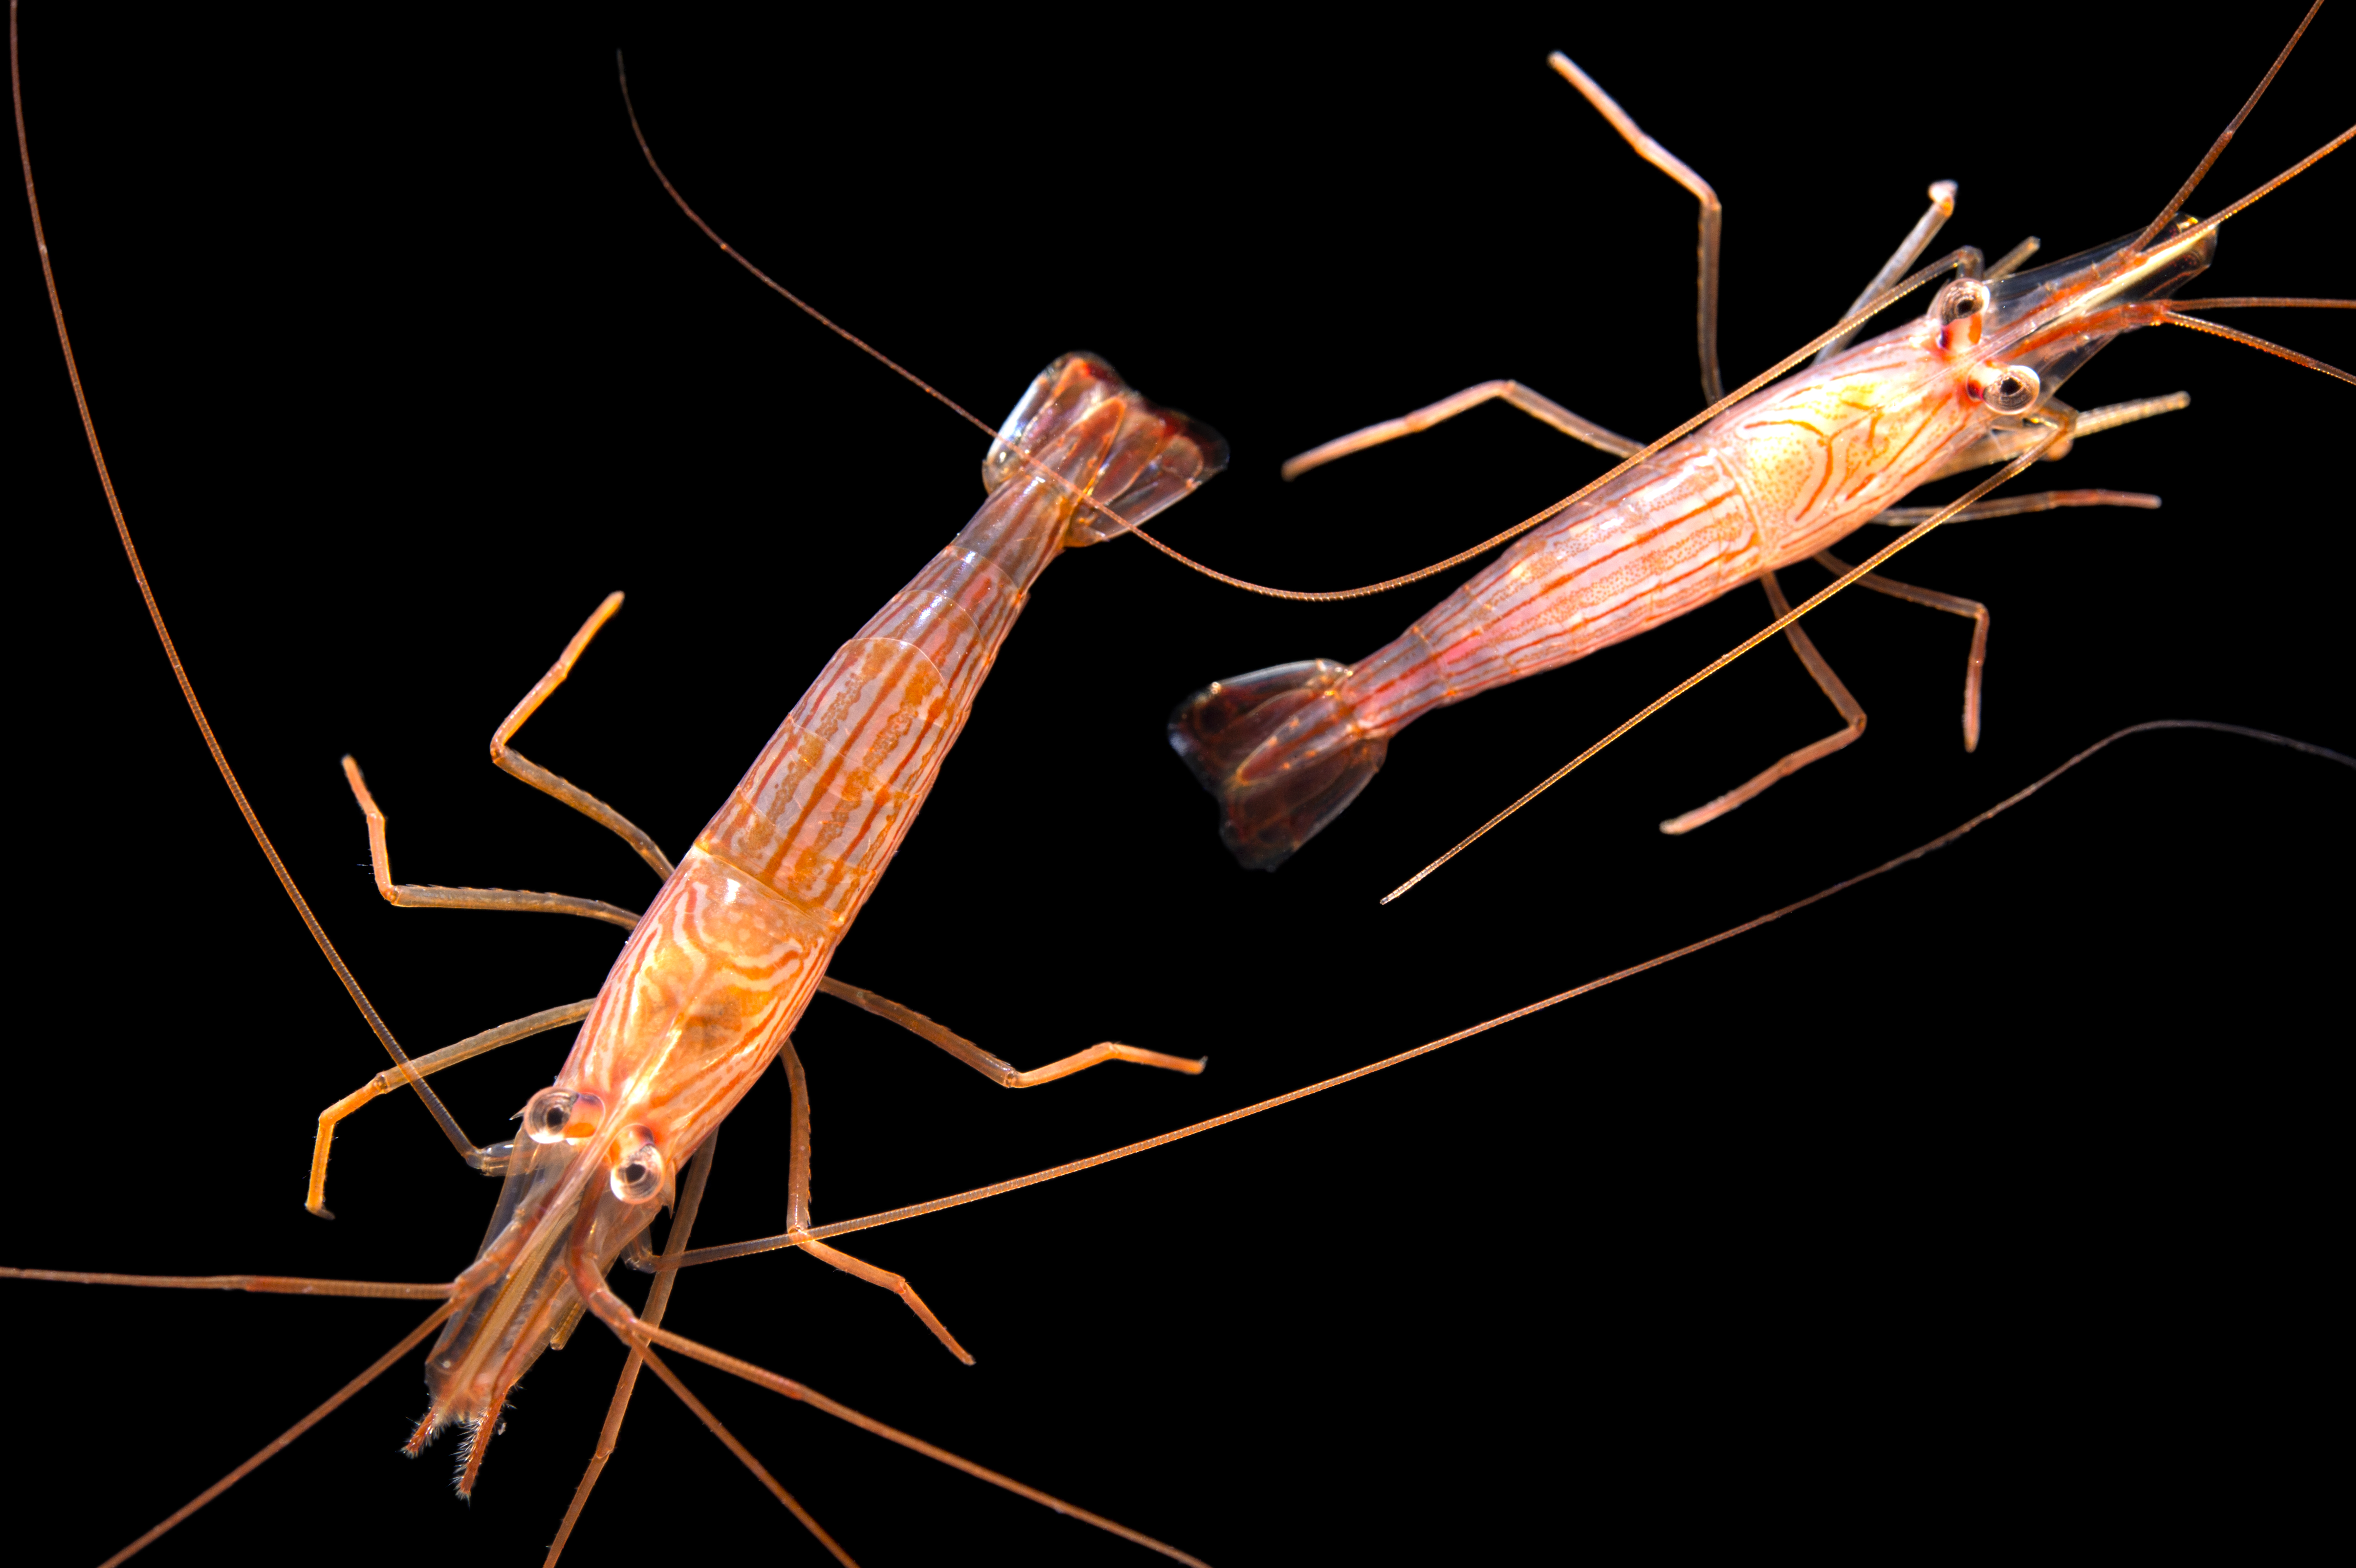 types of peppermint shrimp